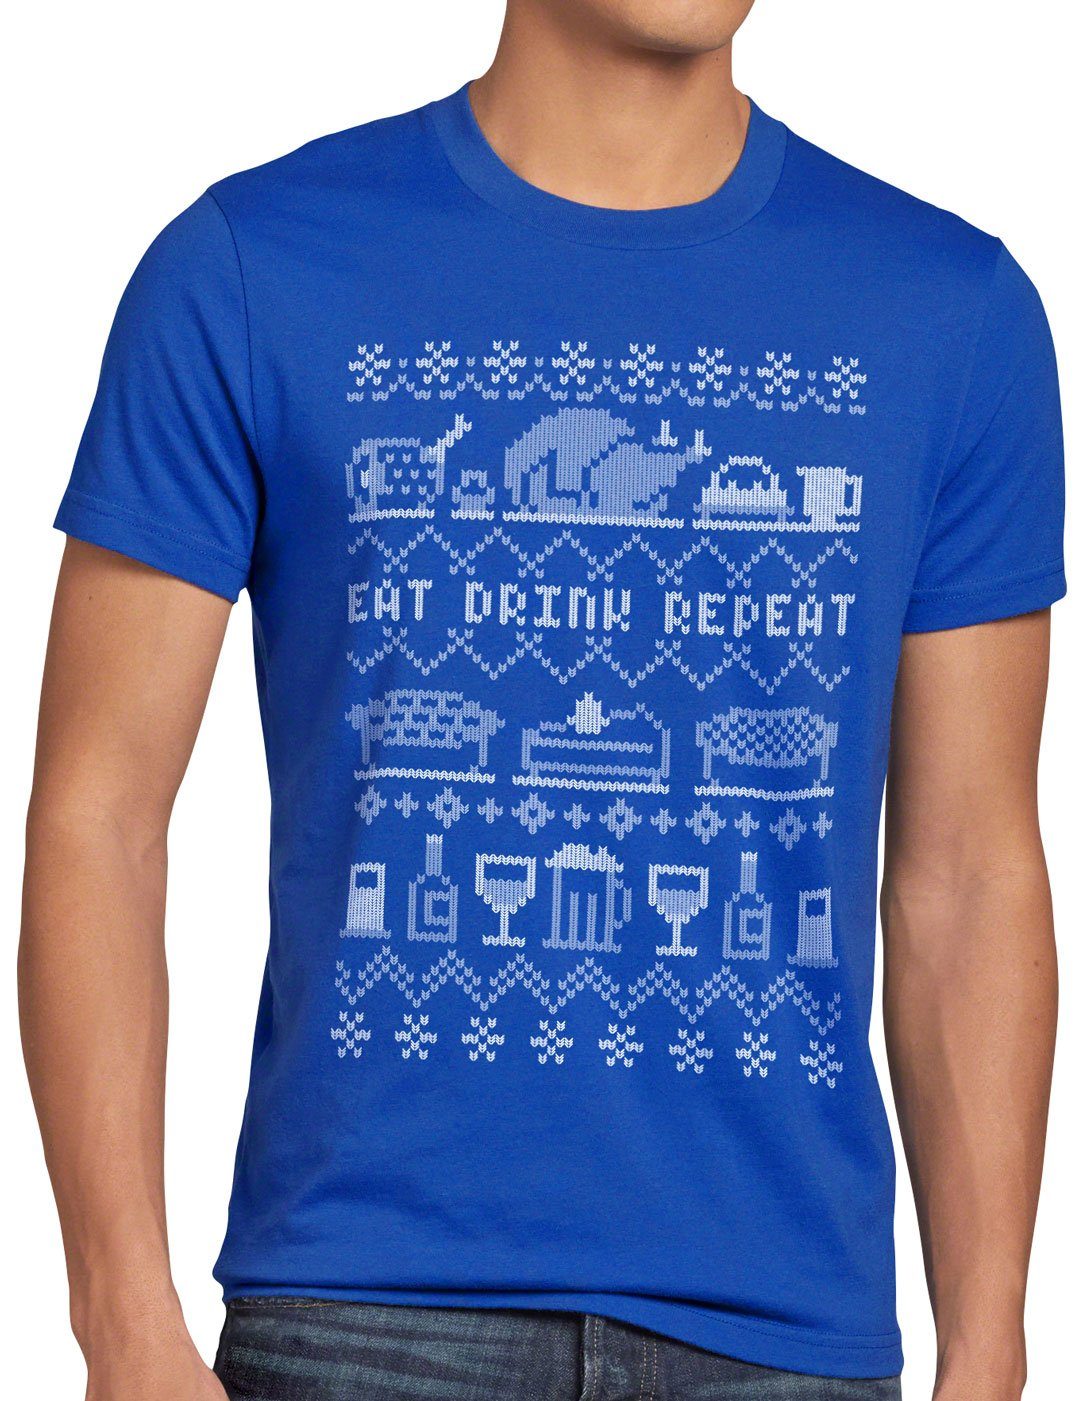 style3 Print-Shirt Herren T-Shirt Eat Drink Repeat Ugly Sweater weihnachtsessen fressen feiertage x-mas pulli blau | T-Shirts